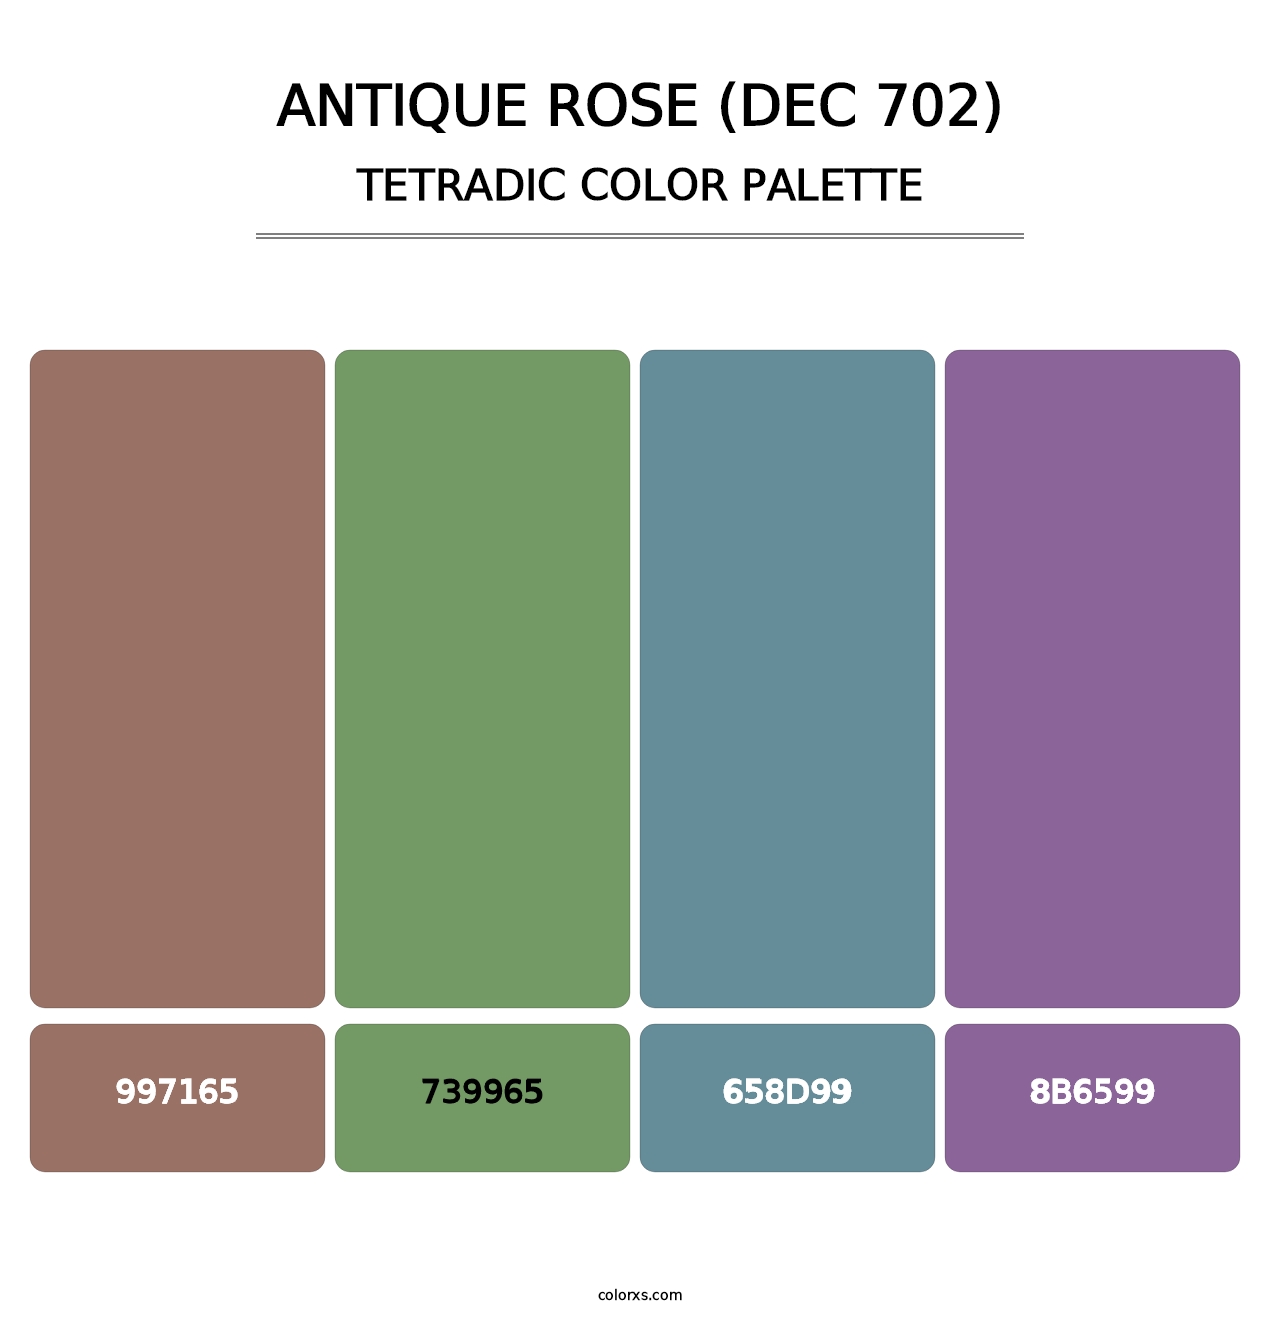 Antique Rose (DEC 702) - Tetradic Color Palette